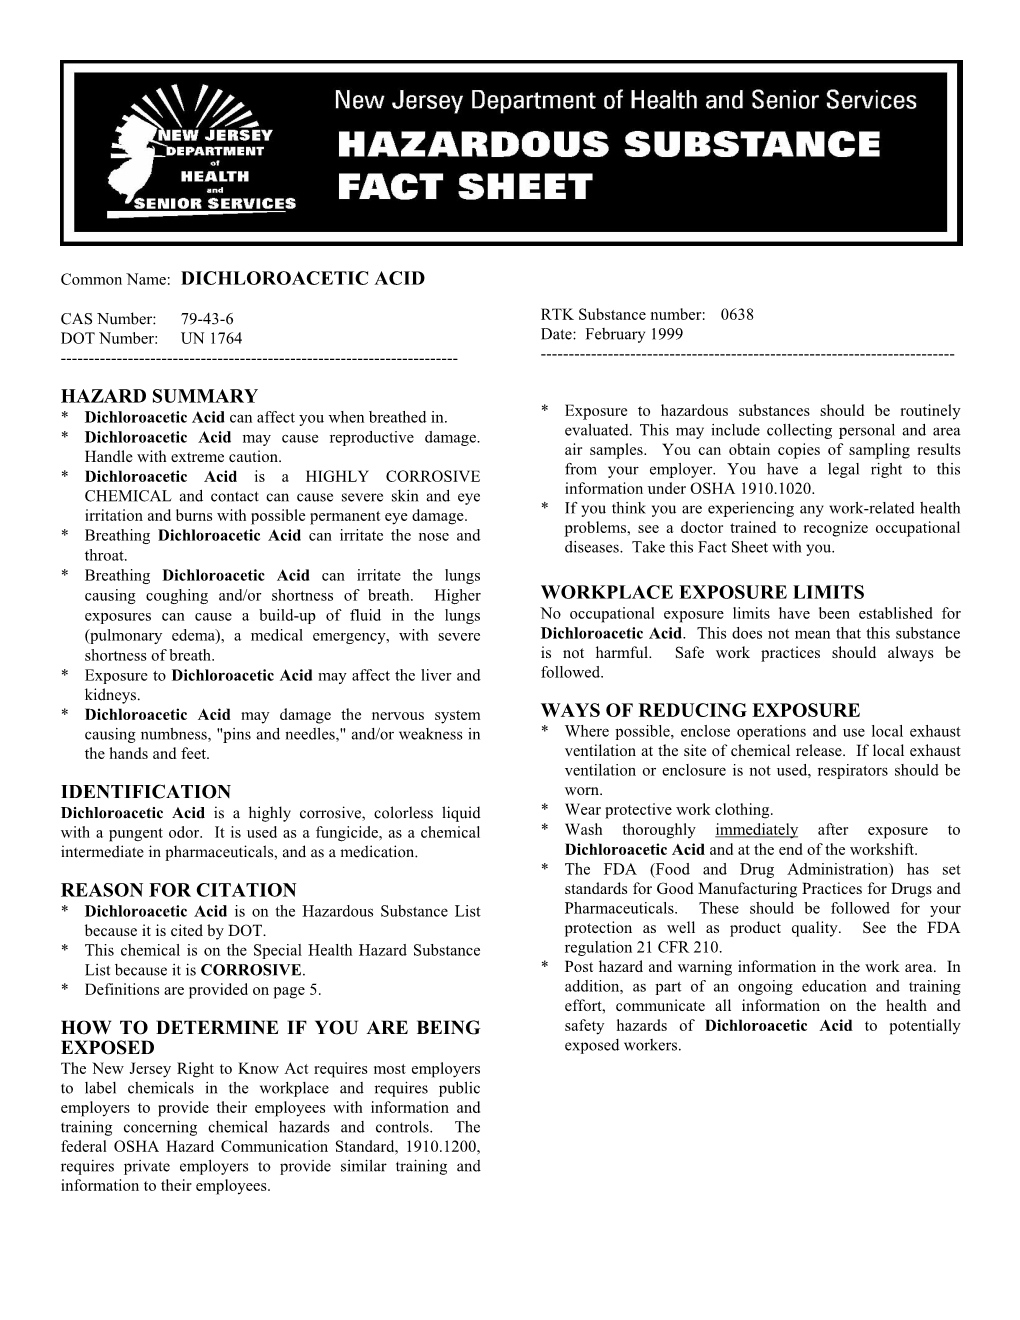 Dichloroacetic Acid Hazard Summary Identification